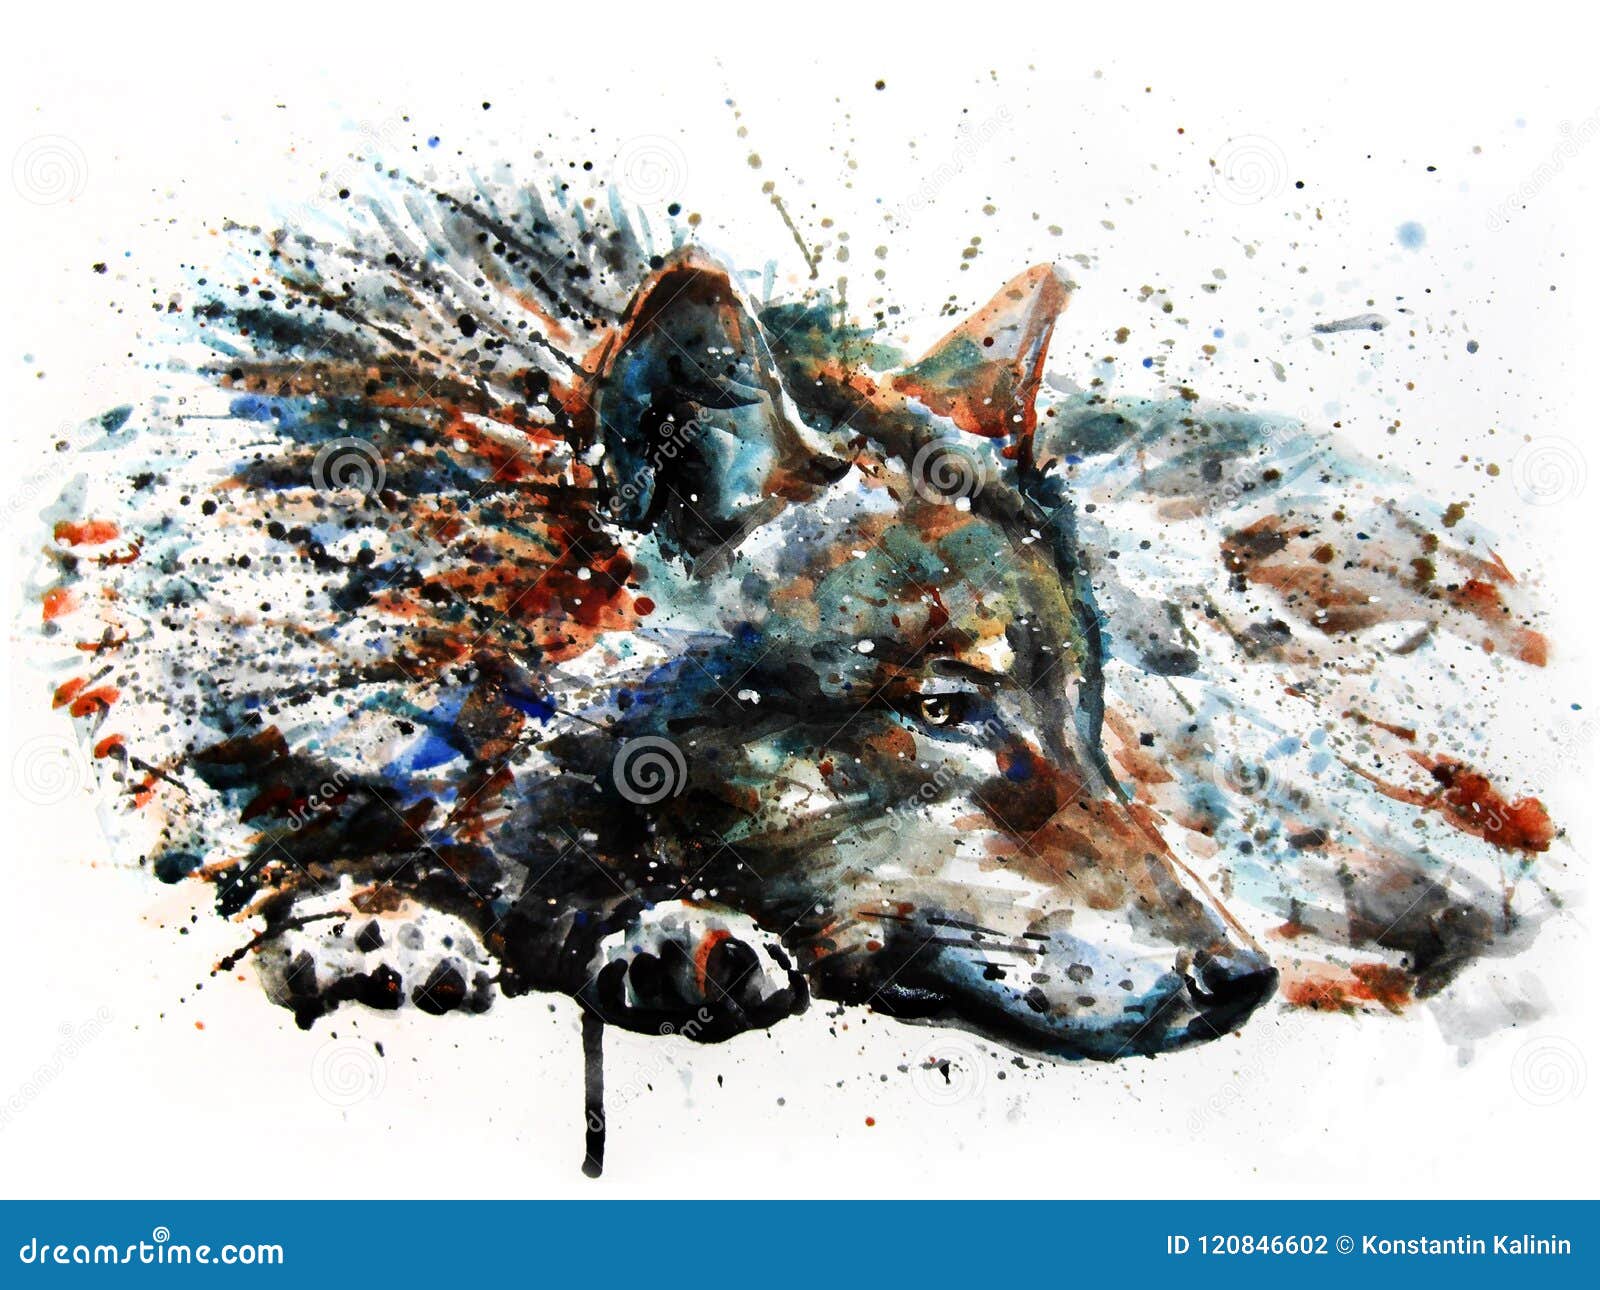 wolf predator watercolor painting drawing